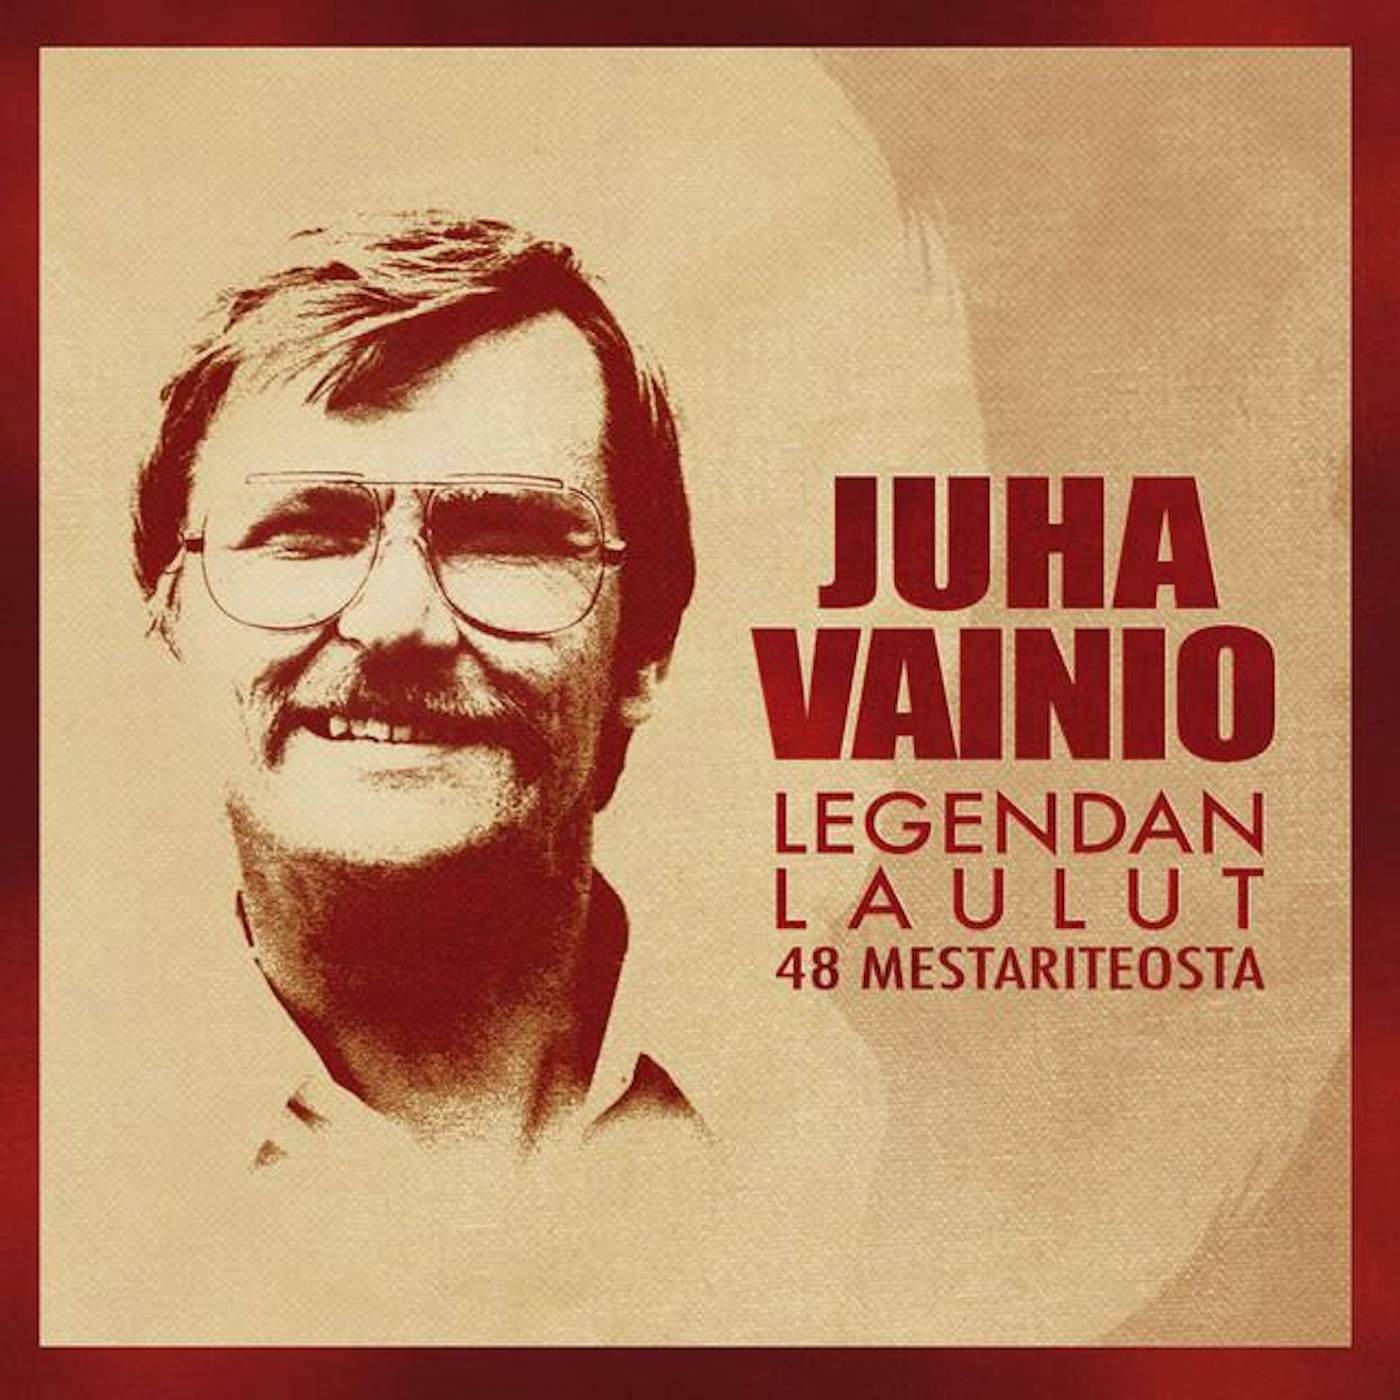 Juha Vainio